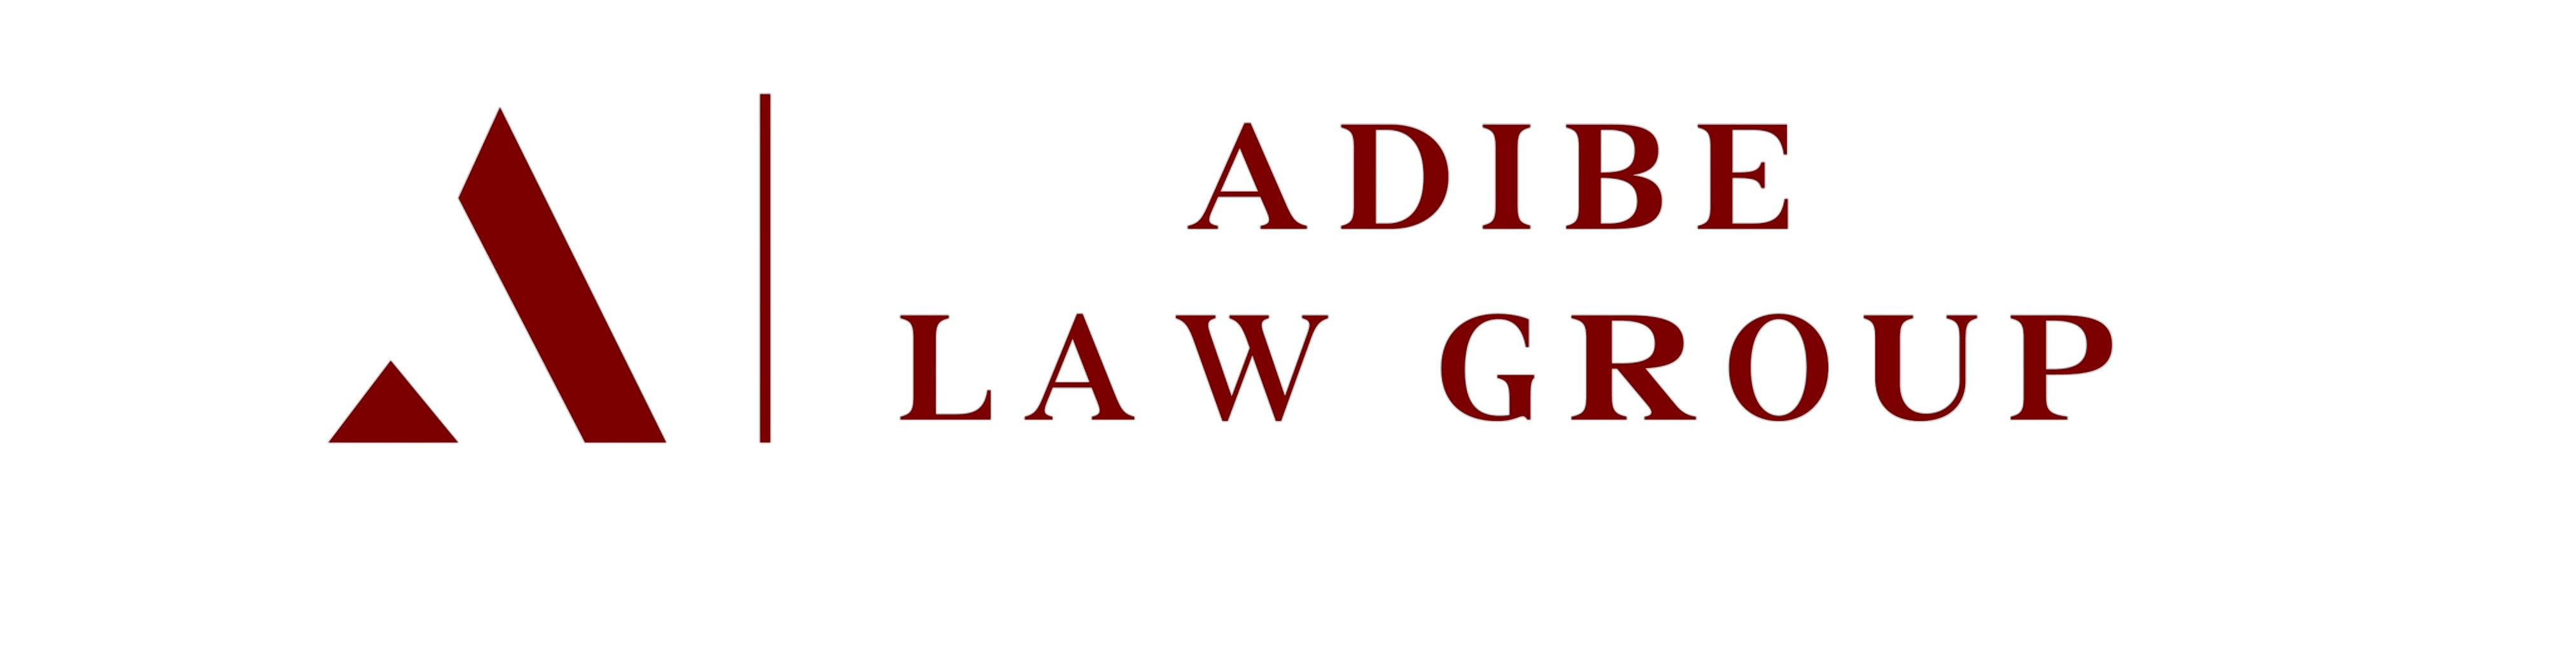 Adibe law group logo